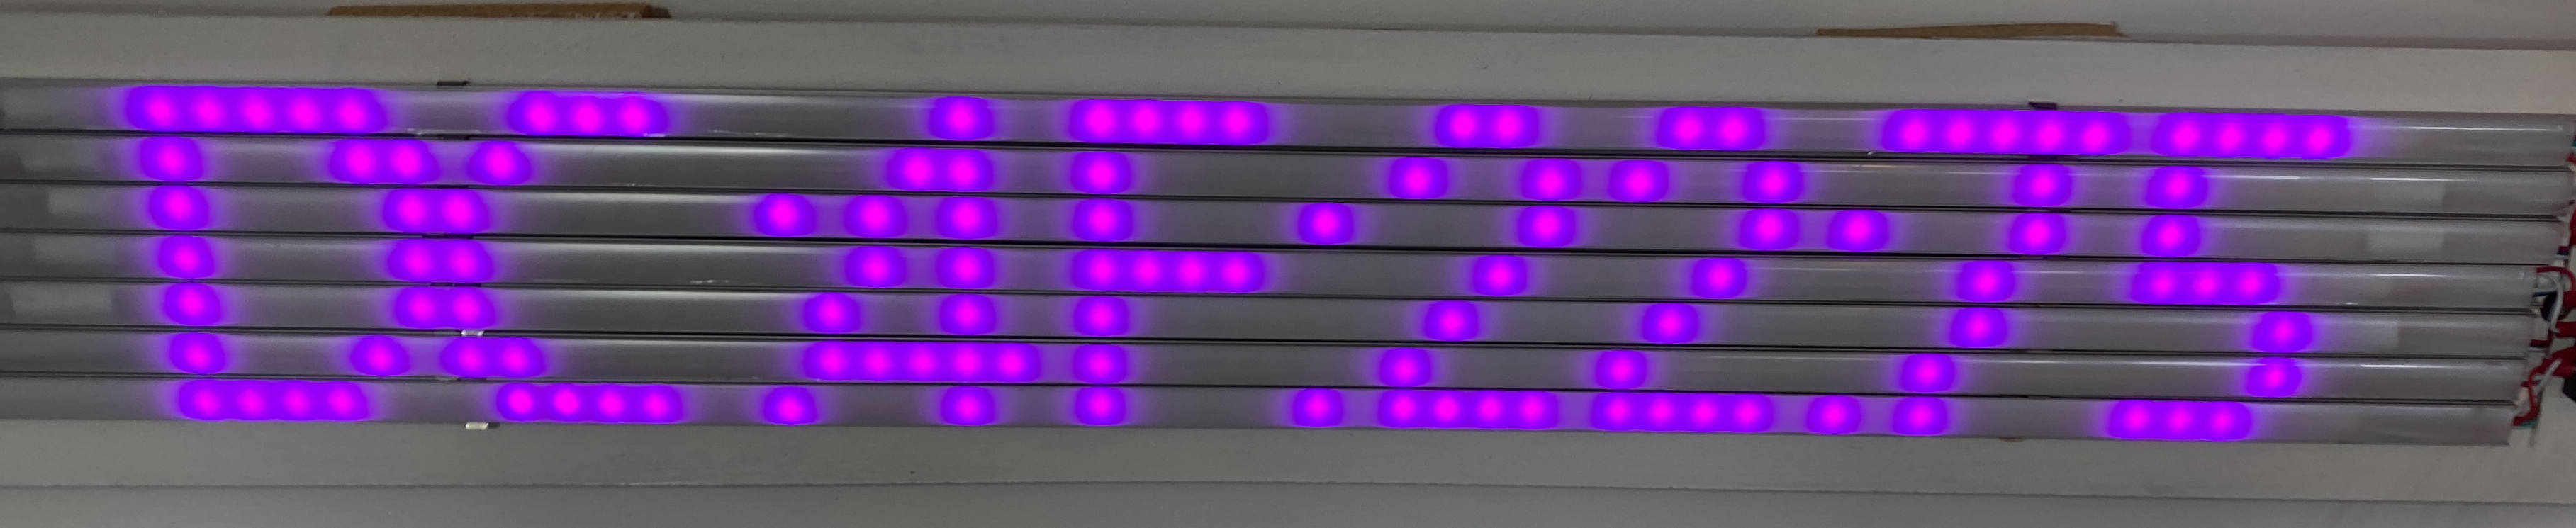 MAC Address Display on LED Panel